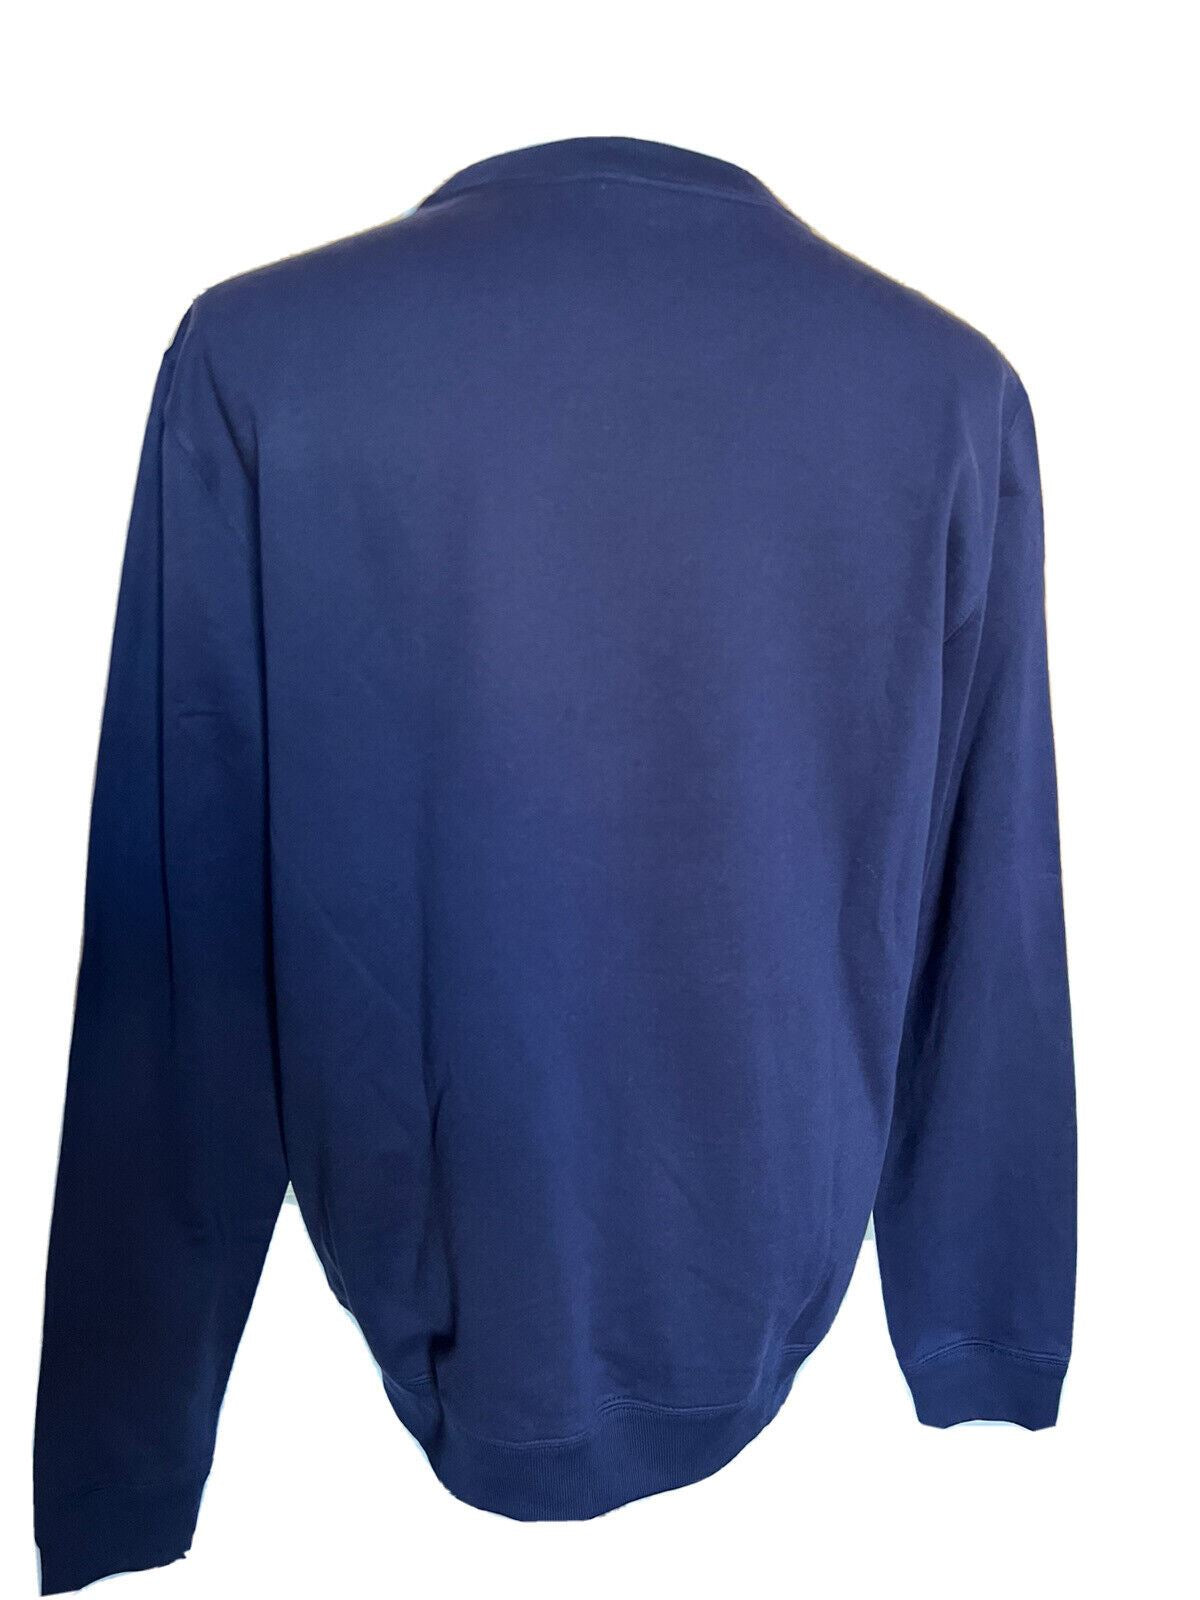 NWT $525 Versace Men's Long Sleeve Sweatshirt Blue Size 3XL A85327 Italy